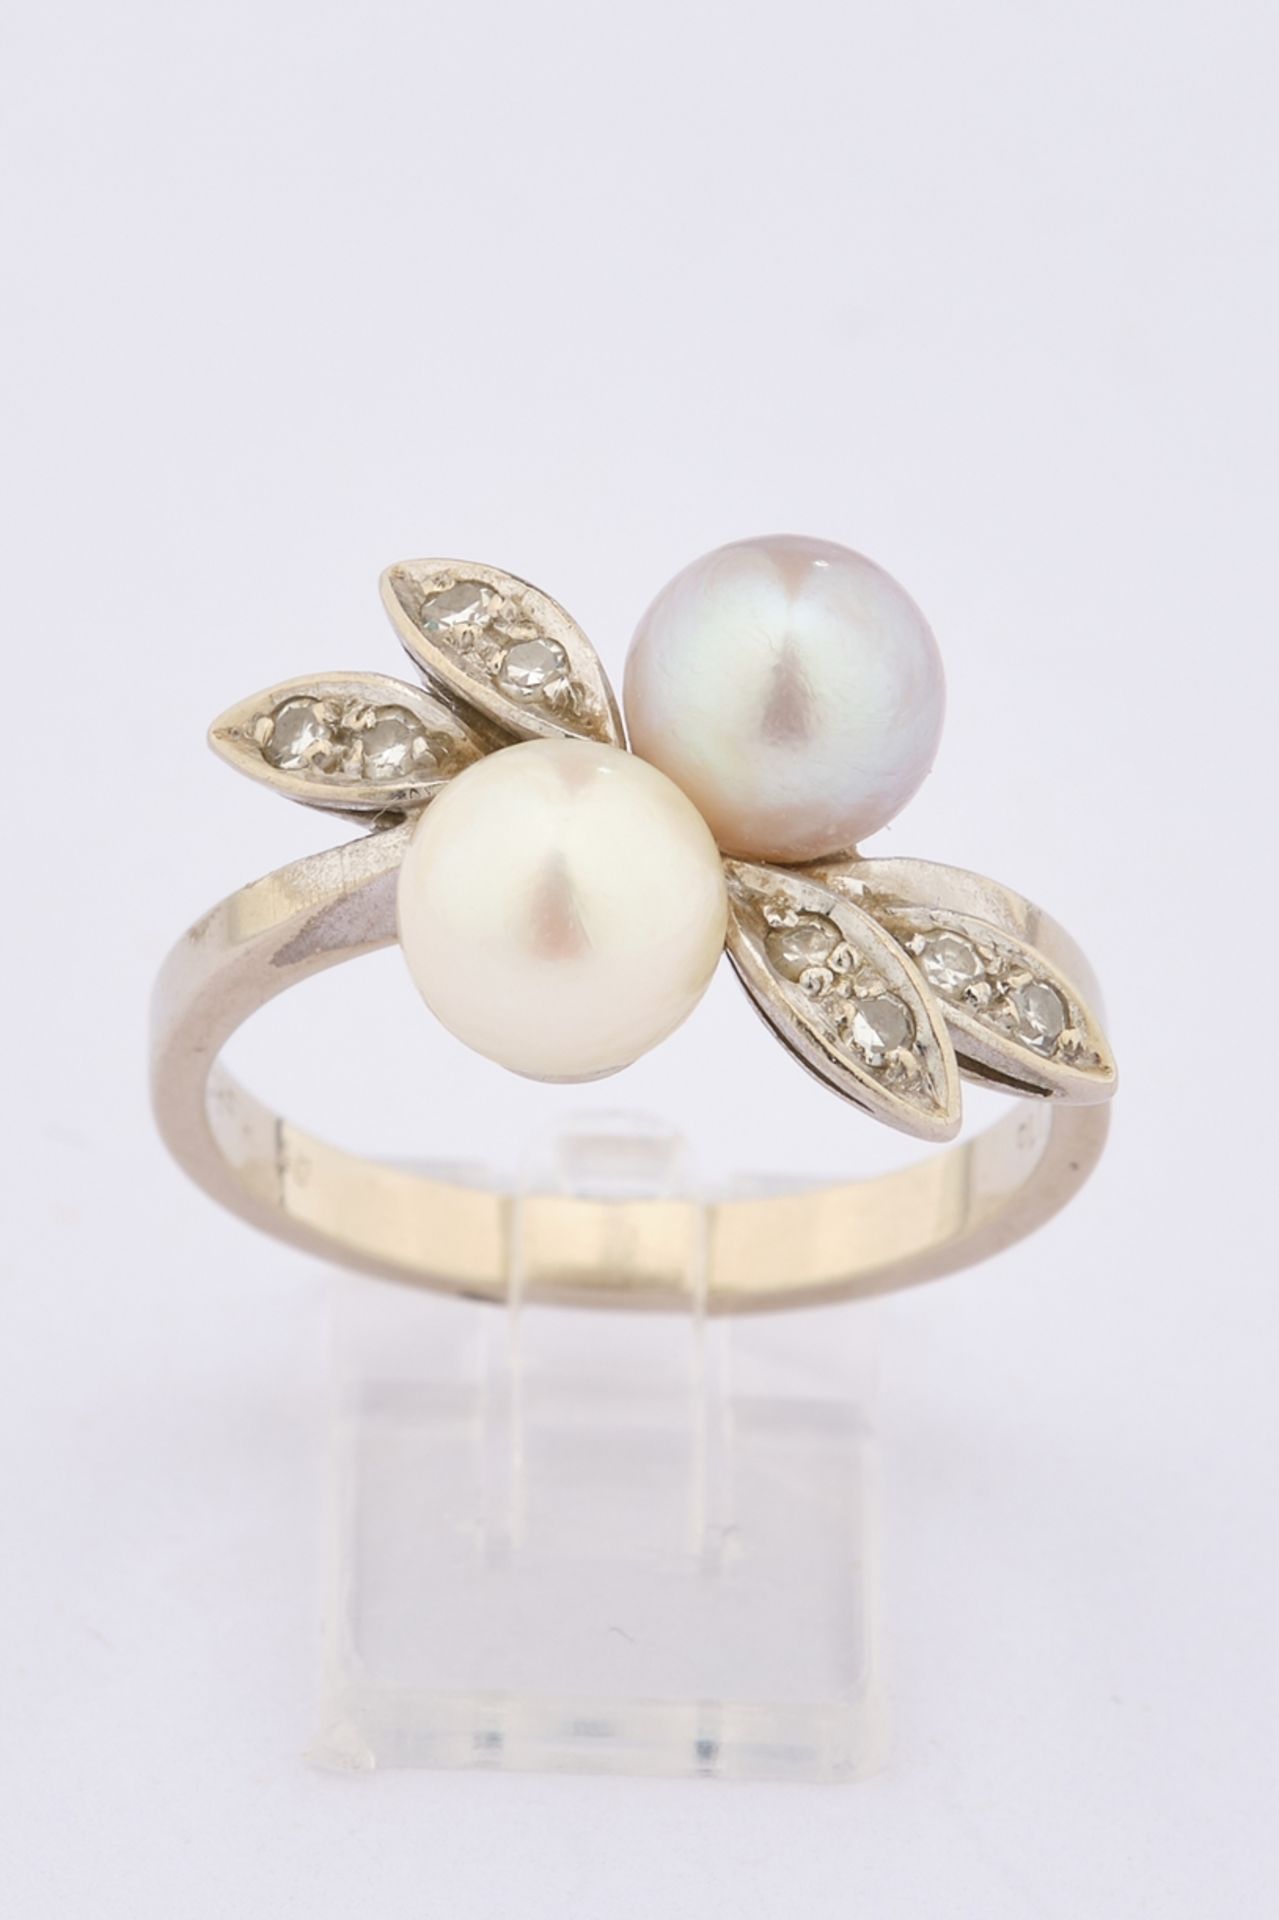 Ring, WG 585, 2 Perlen, Brillanten, in Blütenform, RM 18, 4.88 g